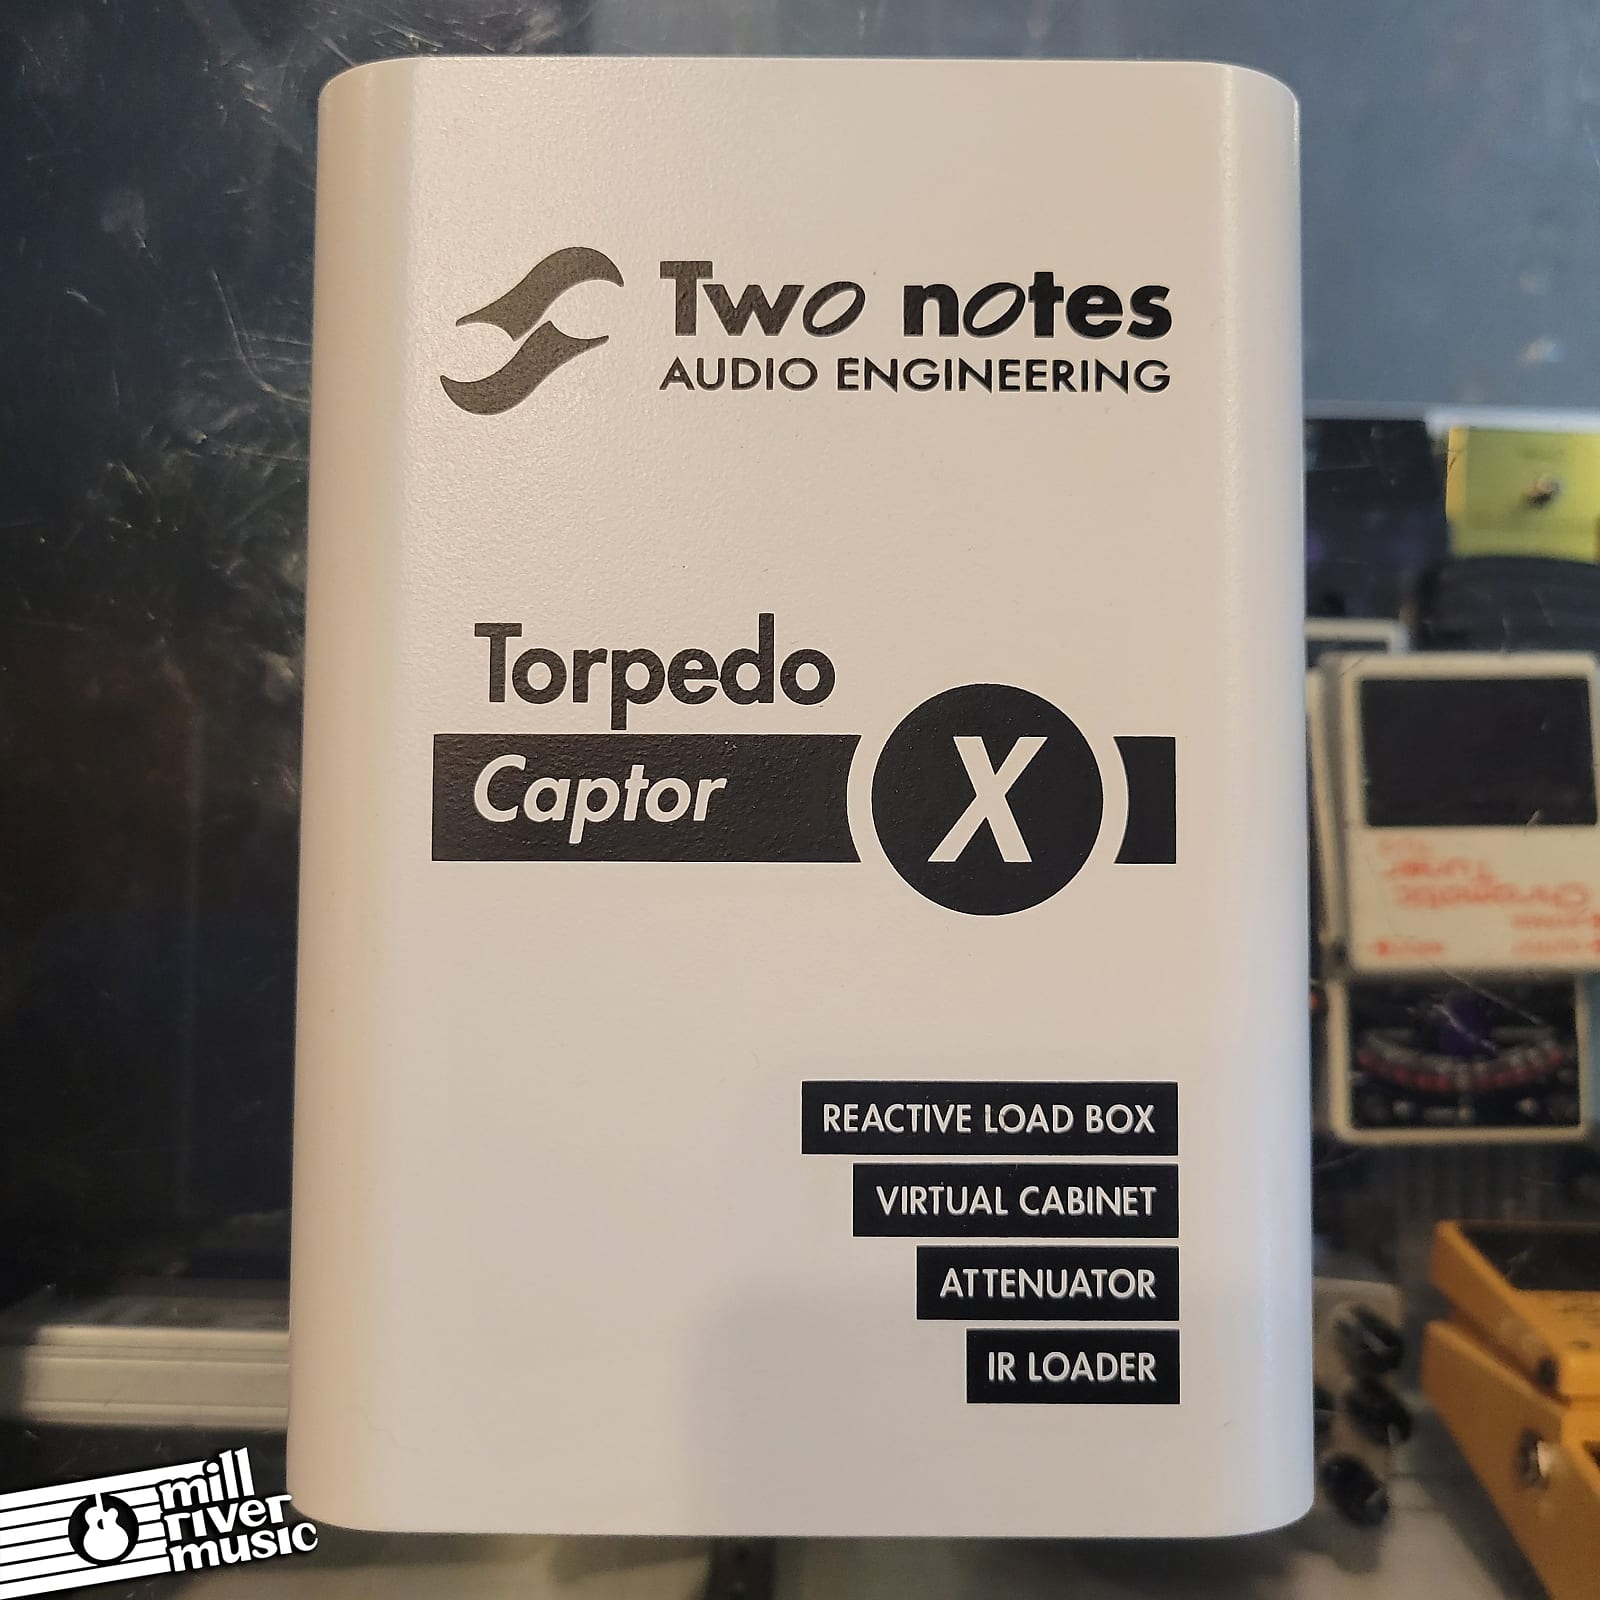 Torpedo Captor X 16ohm Stereo Reactive Load Box/Attenuator Used